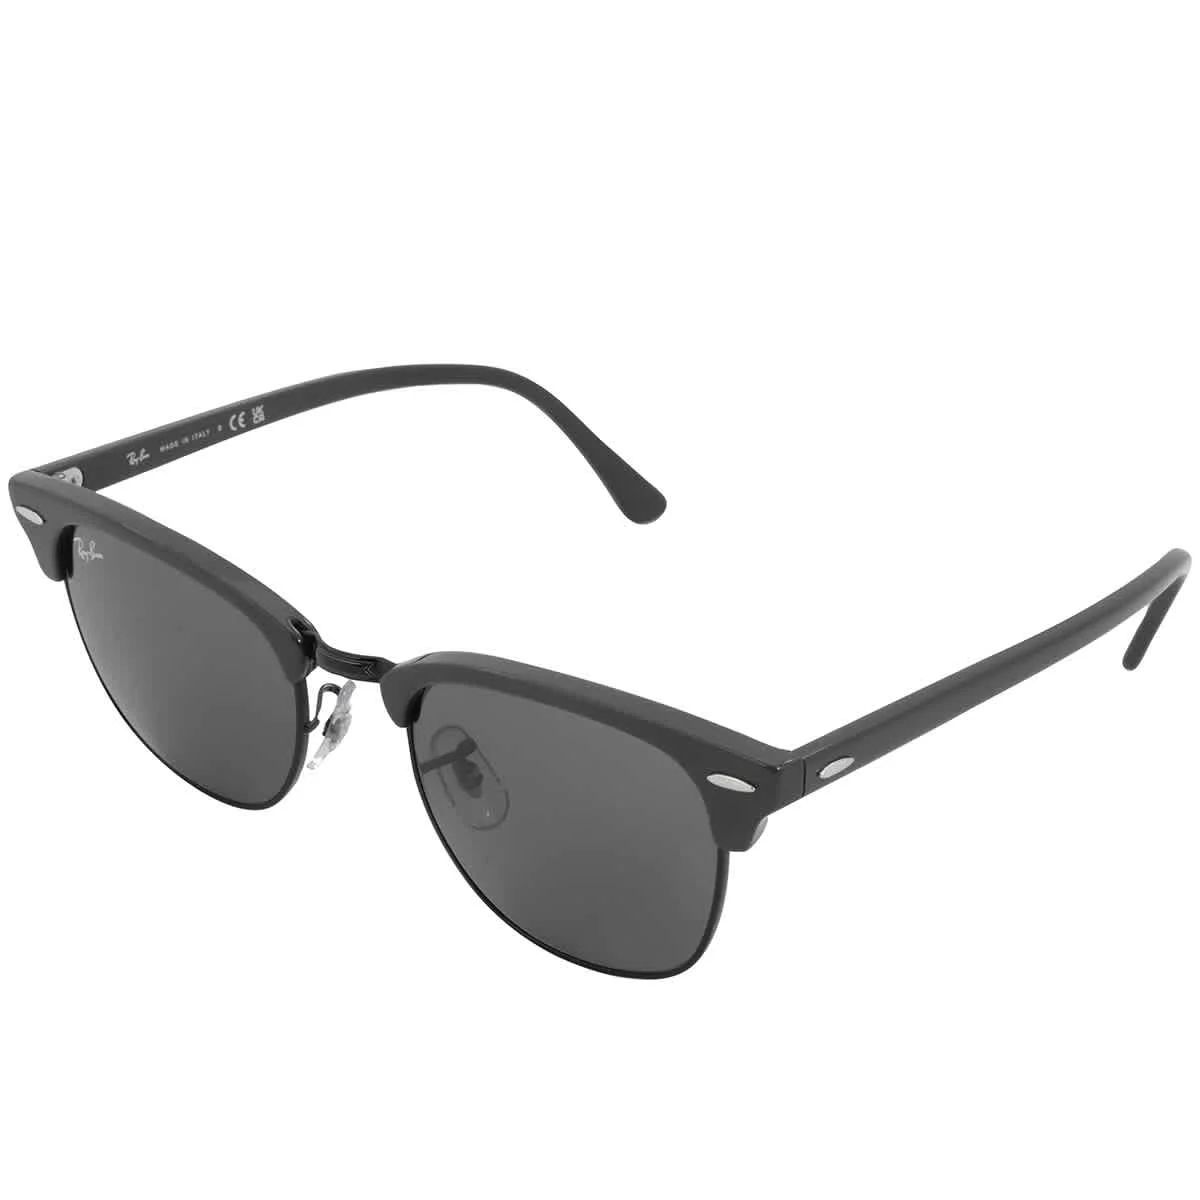 Ray Ban Clubmaster Classic Dark Gray Square Unisex Sunglasses RB3016 1367B1 51 | Walmart (US)